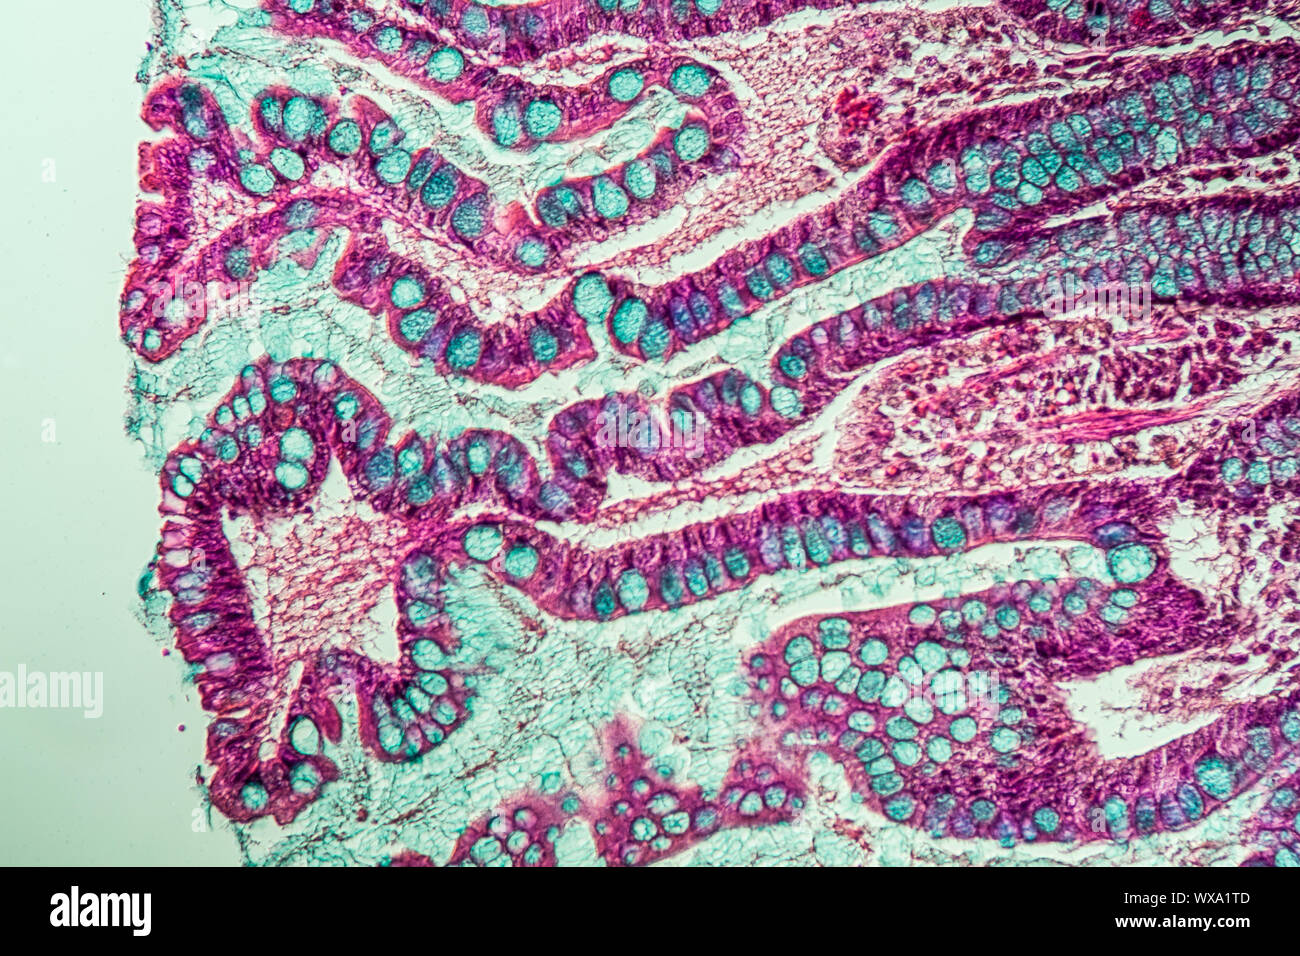 Small intestine with intestinal villi under the microscope 200x Stock Photo